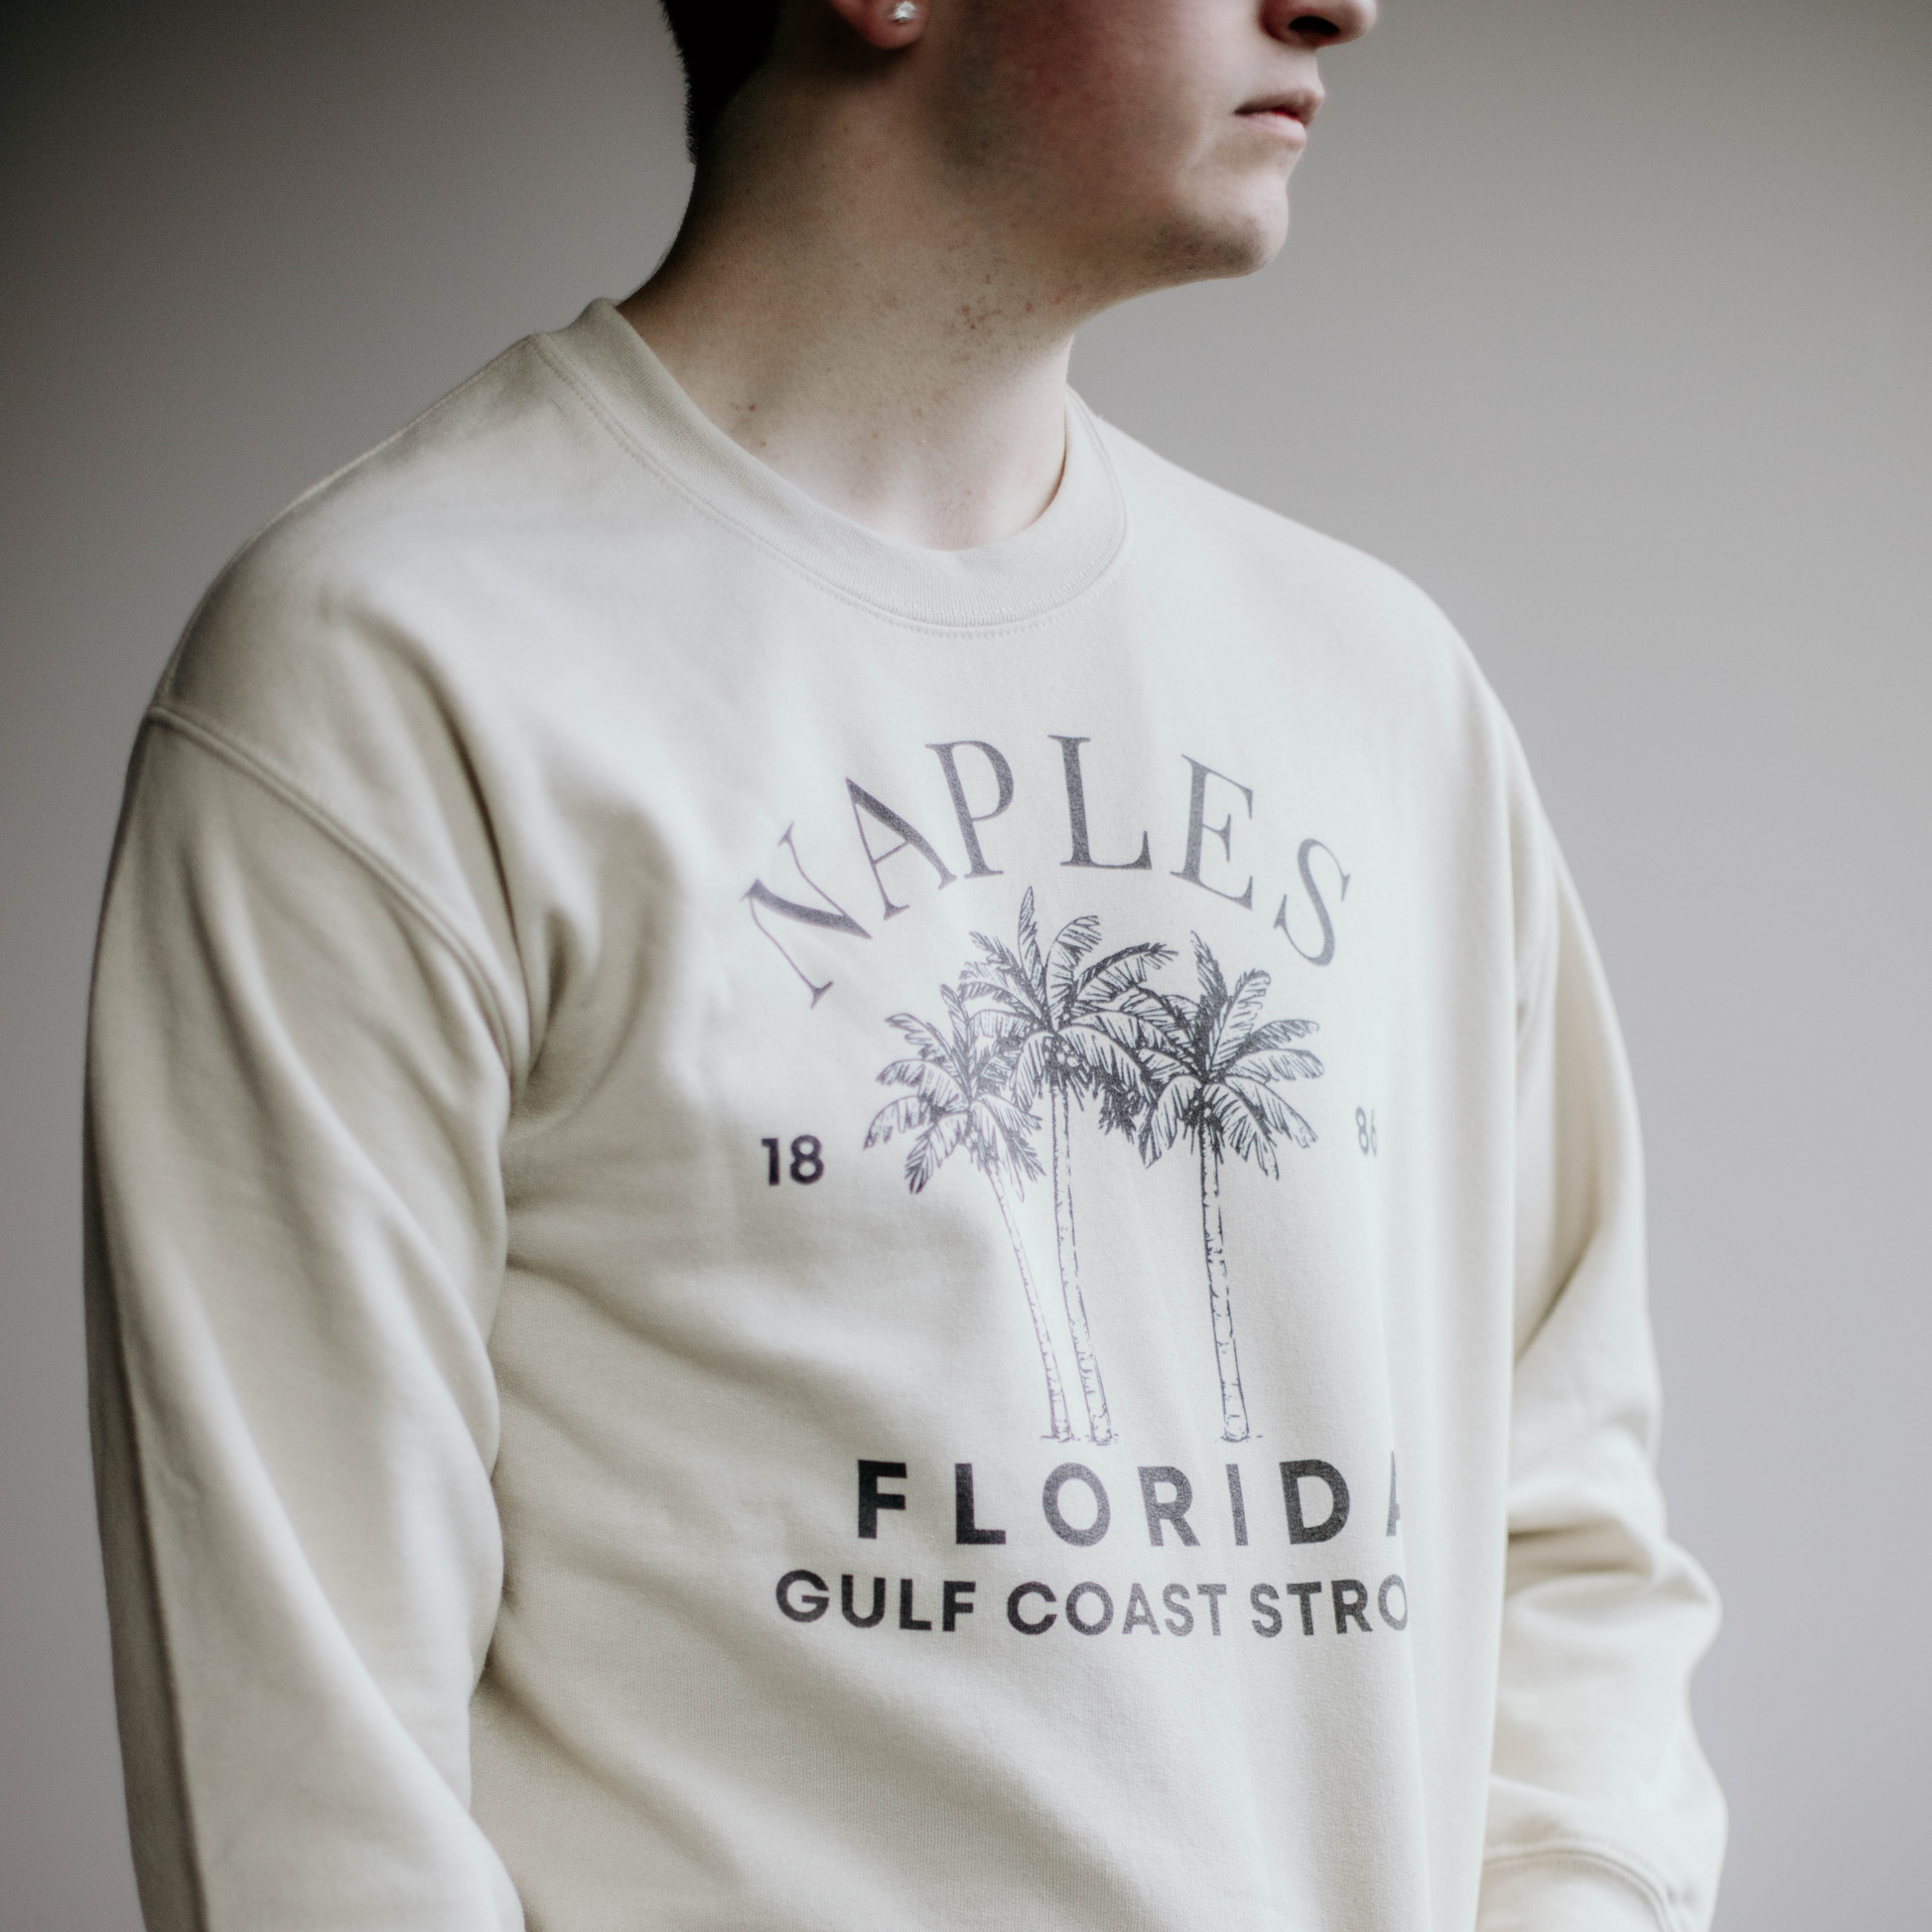 Naples Florida Naples Strong Compass Shirt adult XL / Fishing Shirt